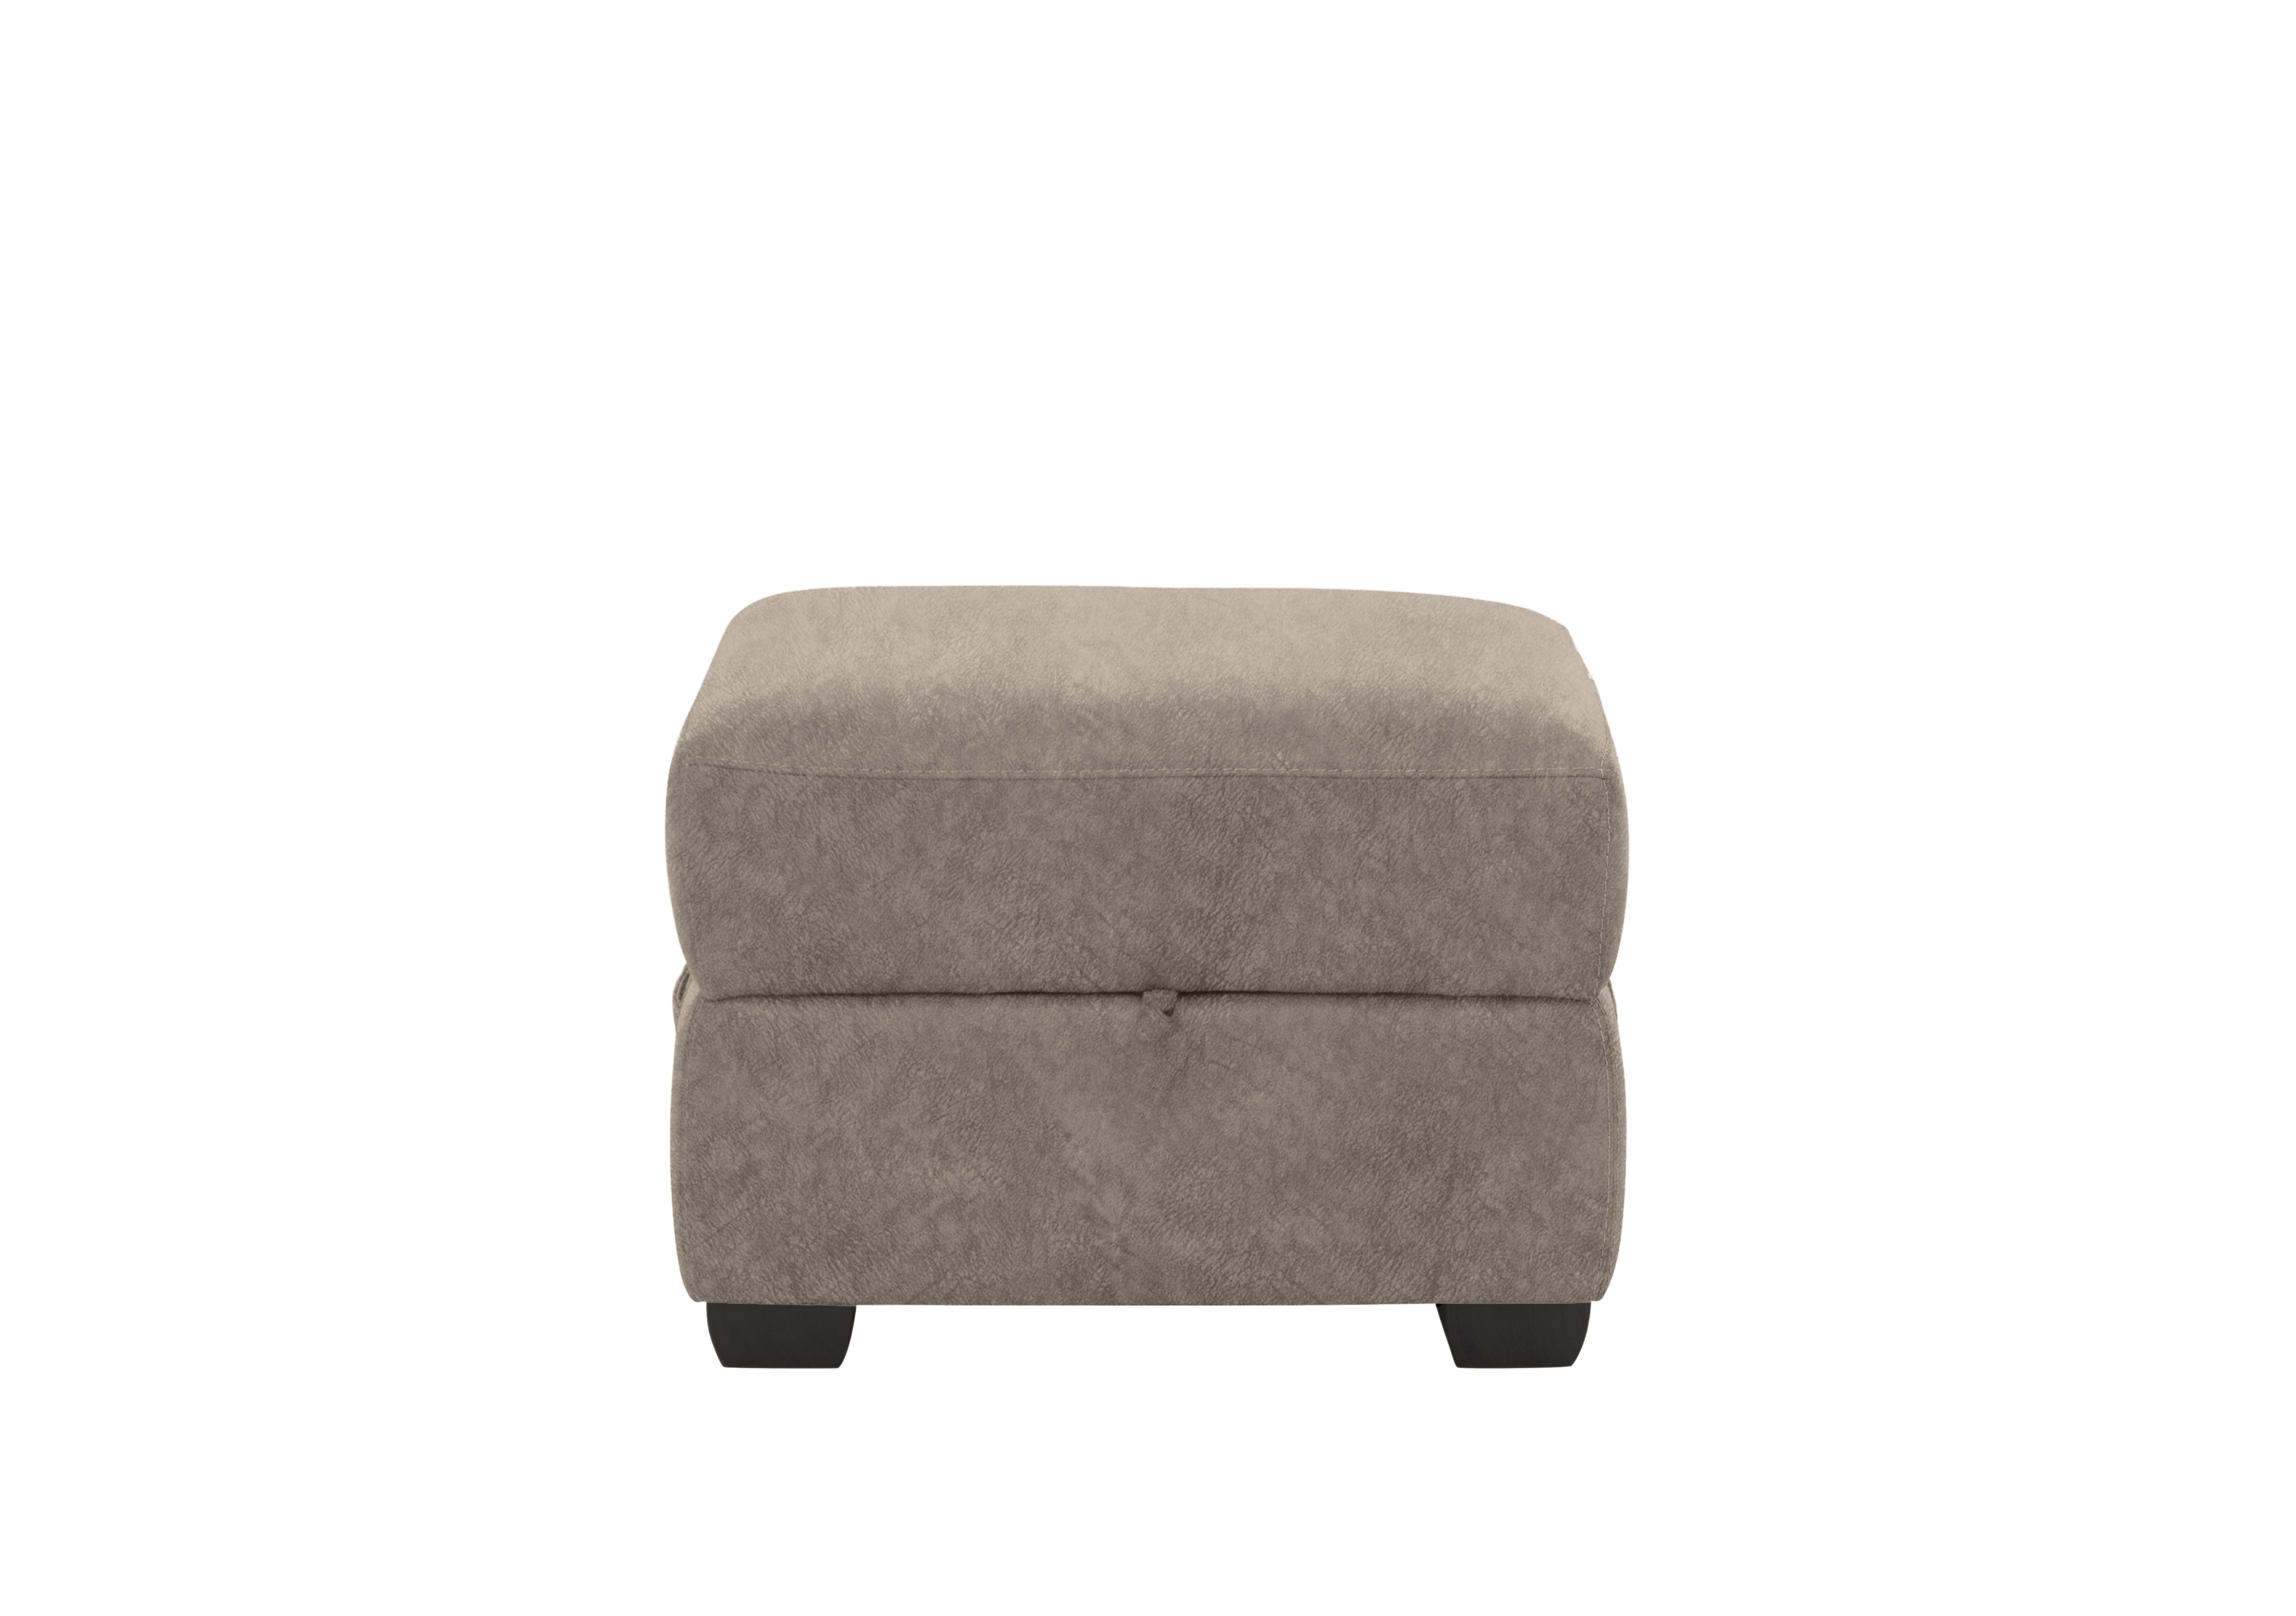 Missouri Fabric Storage Footstool in Bfa-Bnn-R29 Fv1 Mink on Furniture Village